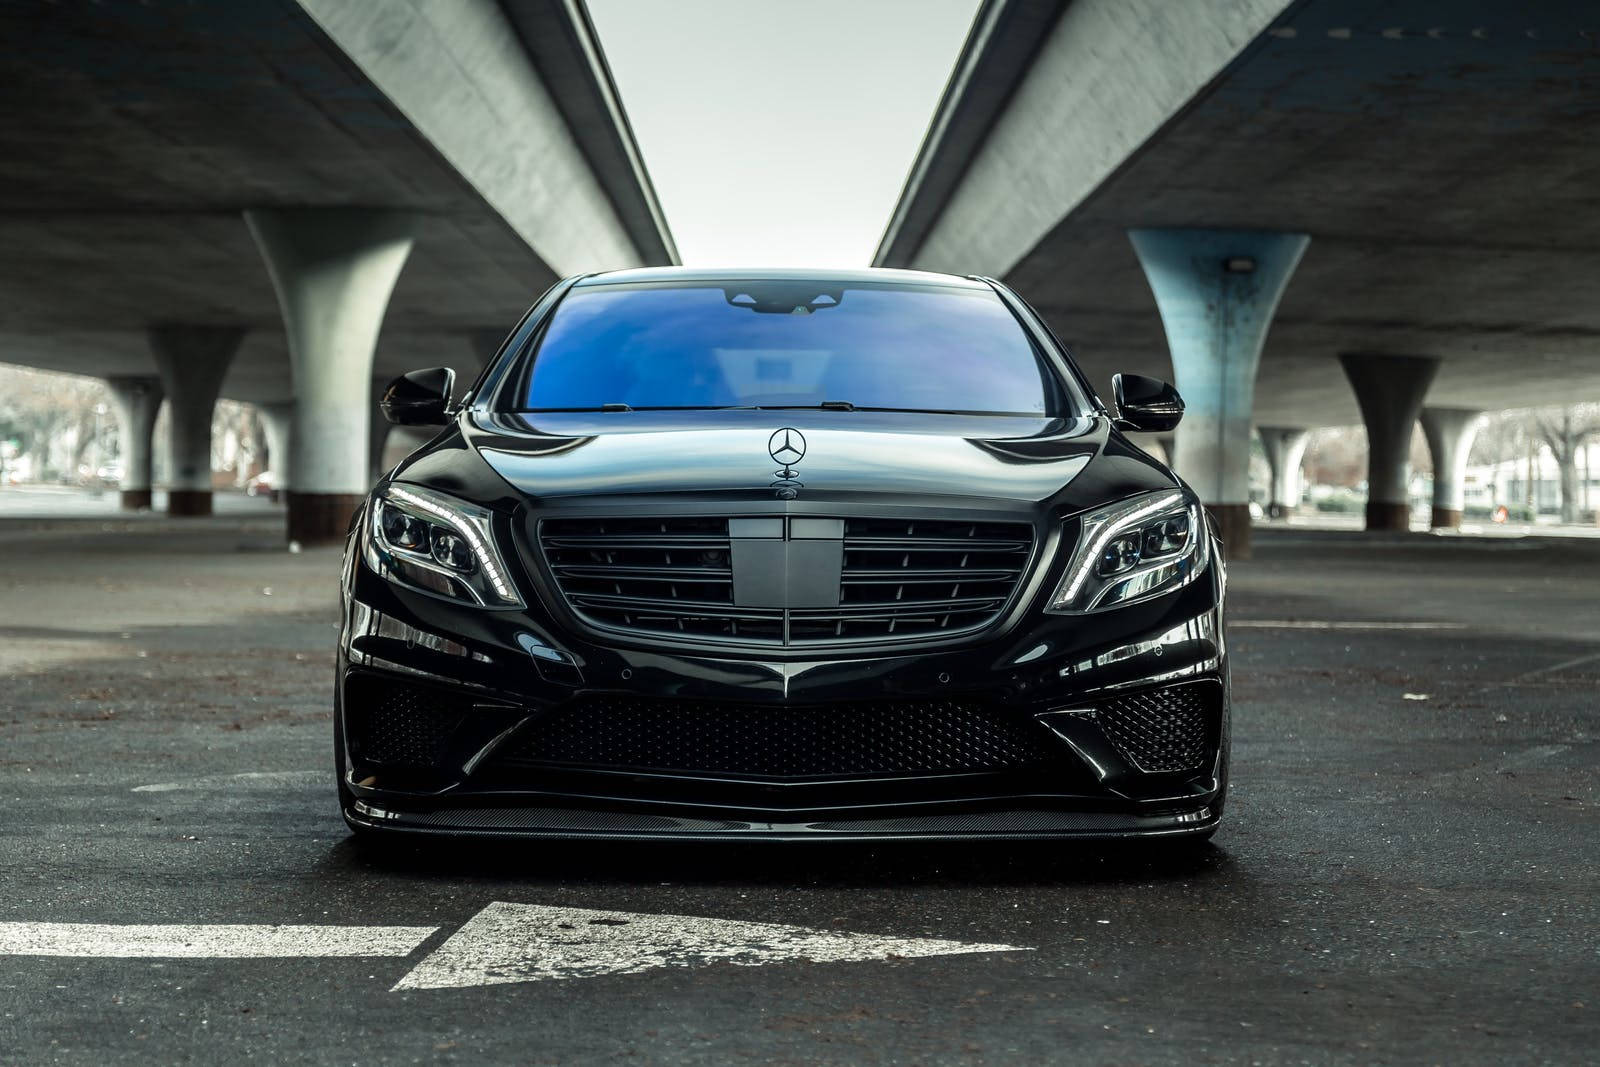 Black Mercedes S63 Amg Luxury Car Background